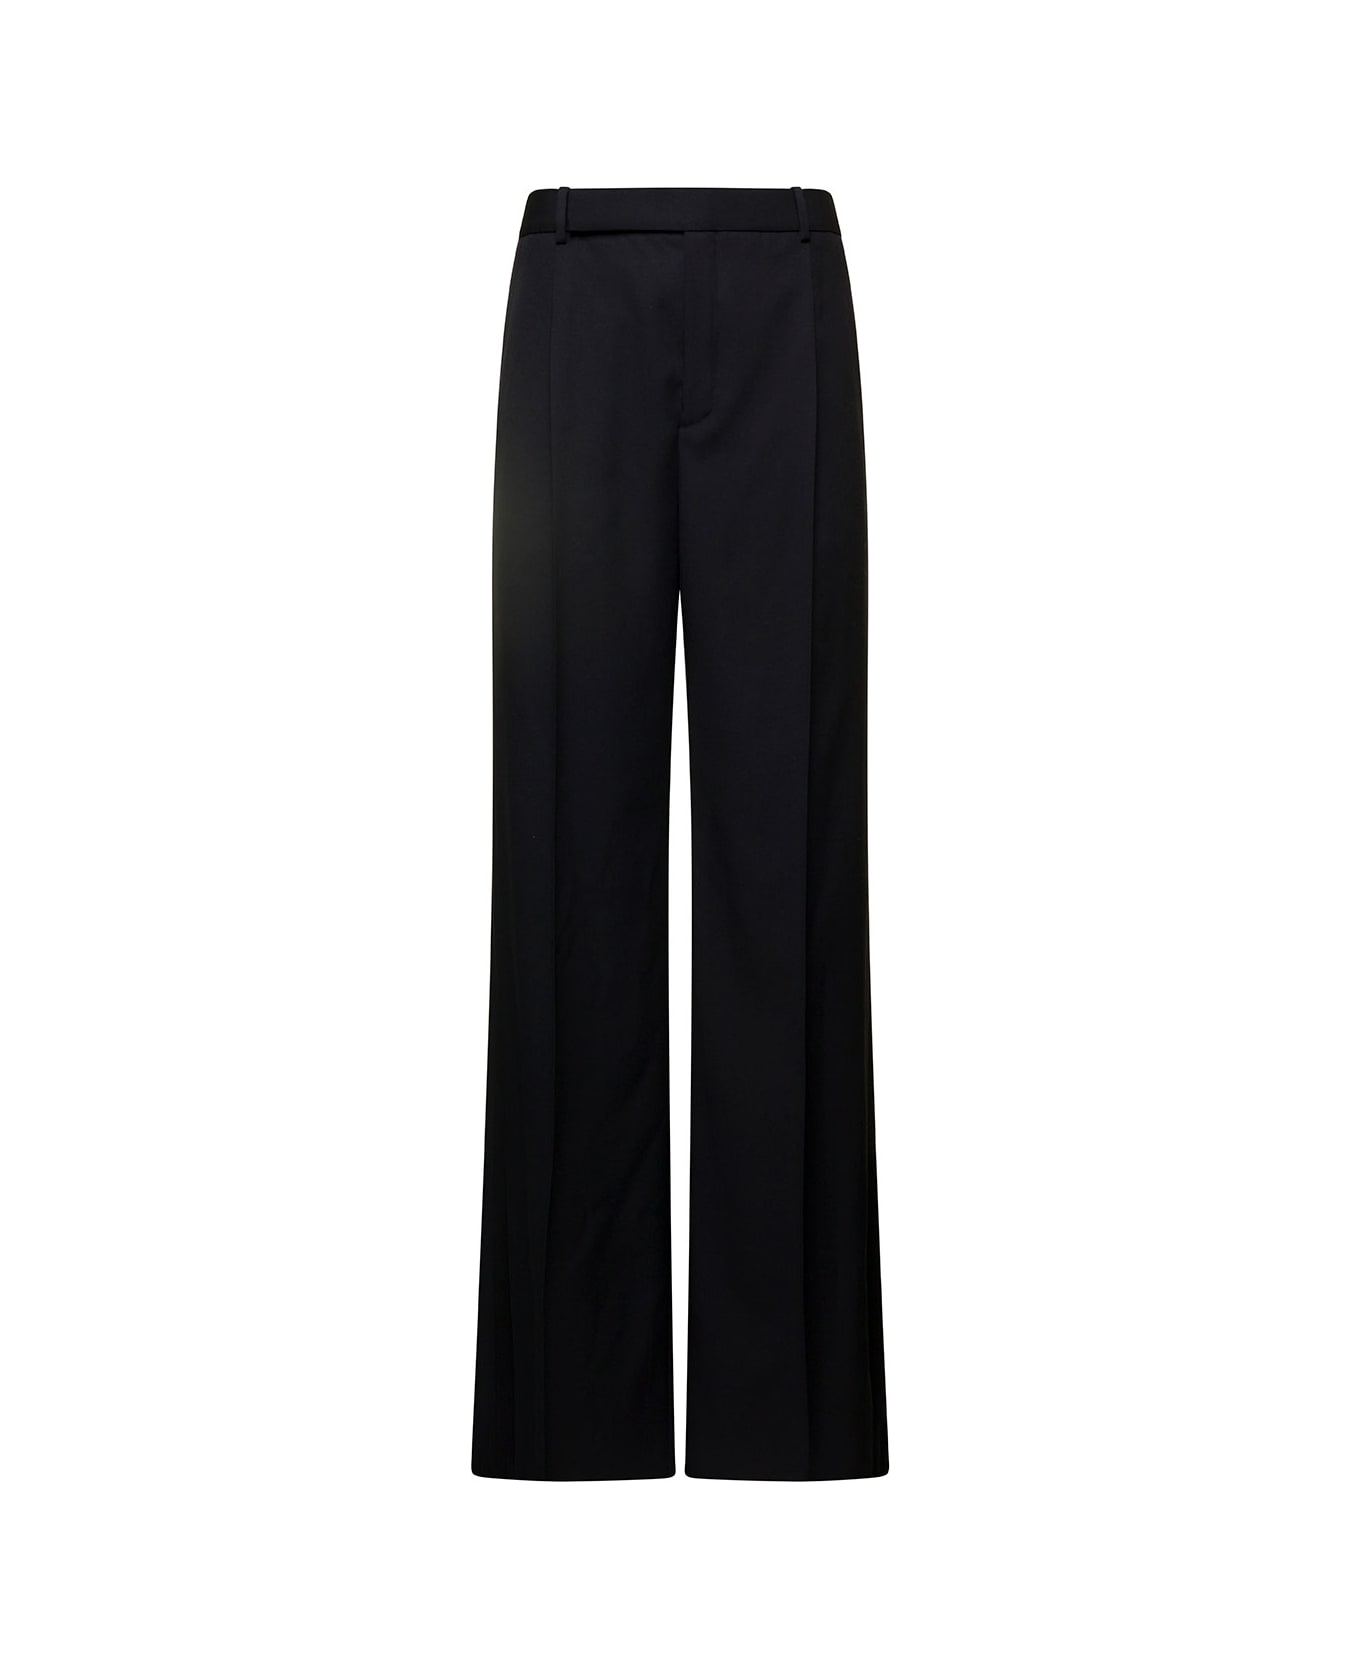 Saint Laurent Black Satin Stripe Detail Flared Trousers In Wool Man - Black